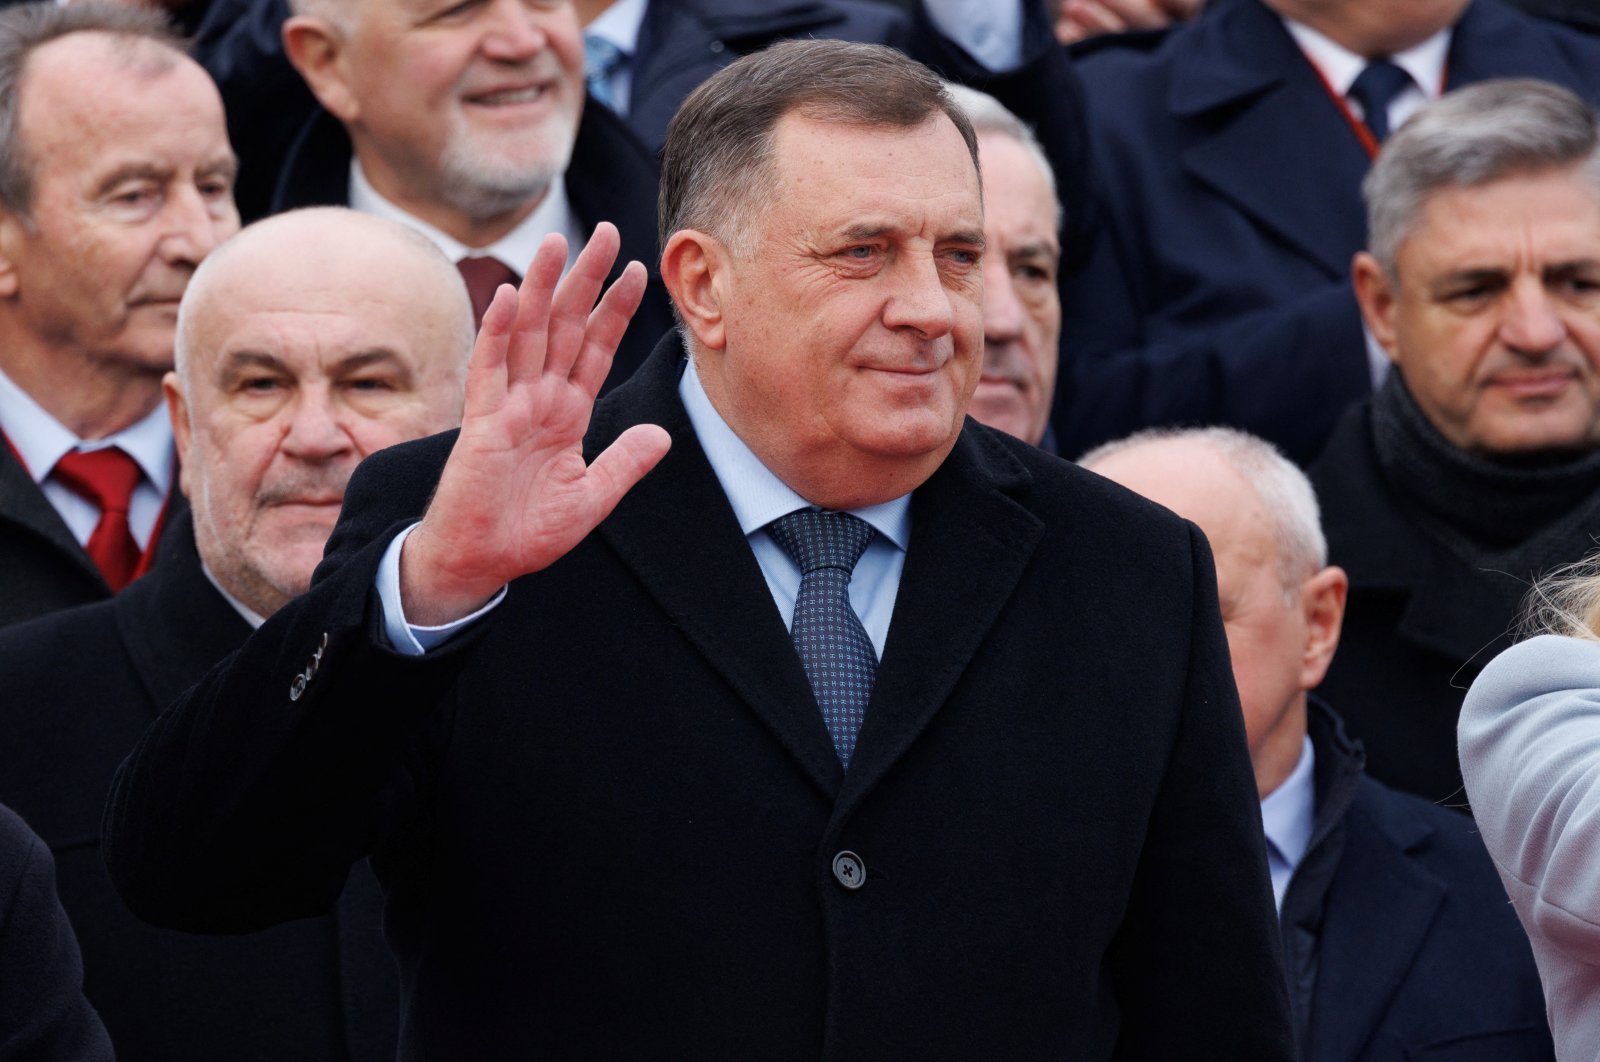 Bosnia's fate depends on Erdoğan's support: Serb leader Dodik